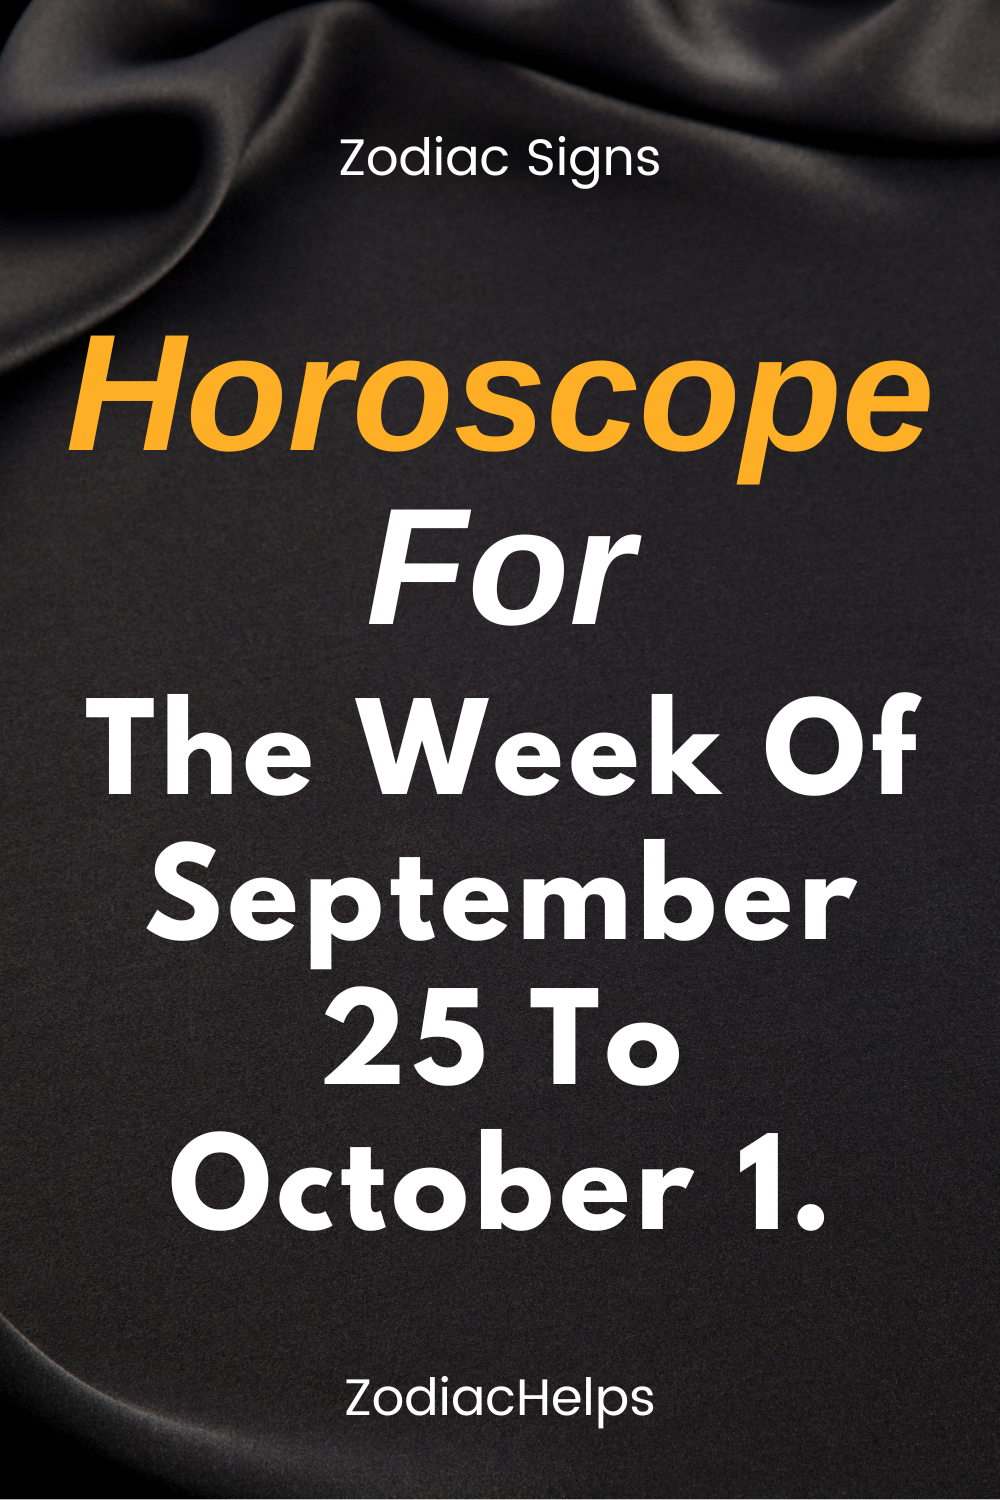 Horoscope For The Week Of September 25 To October 1.